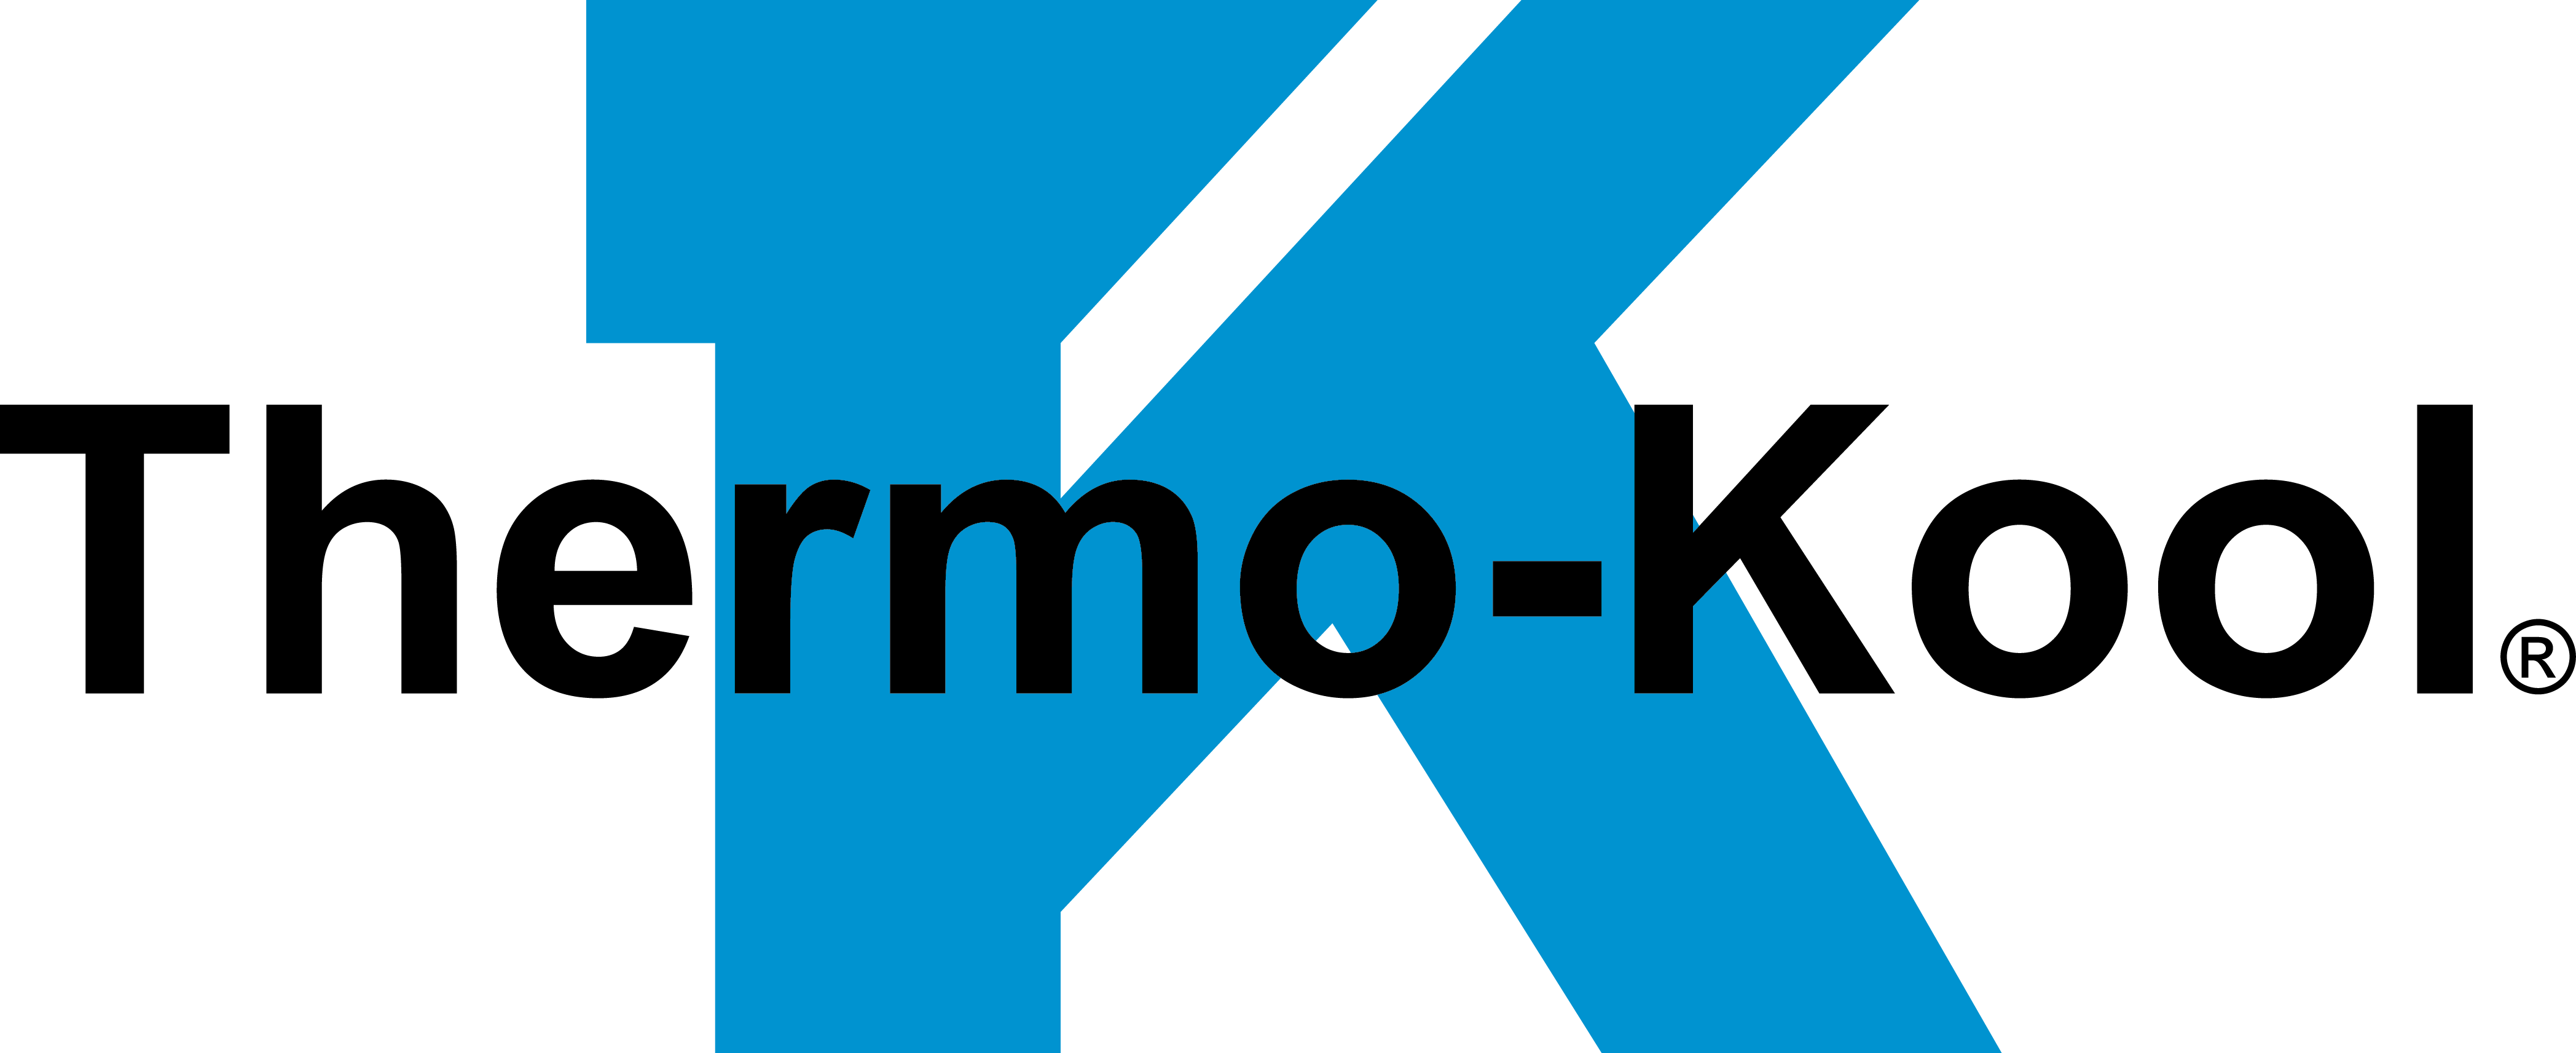 ThermoKool-logo3-1